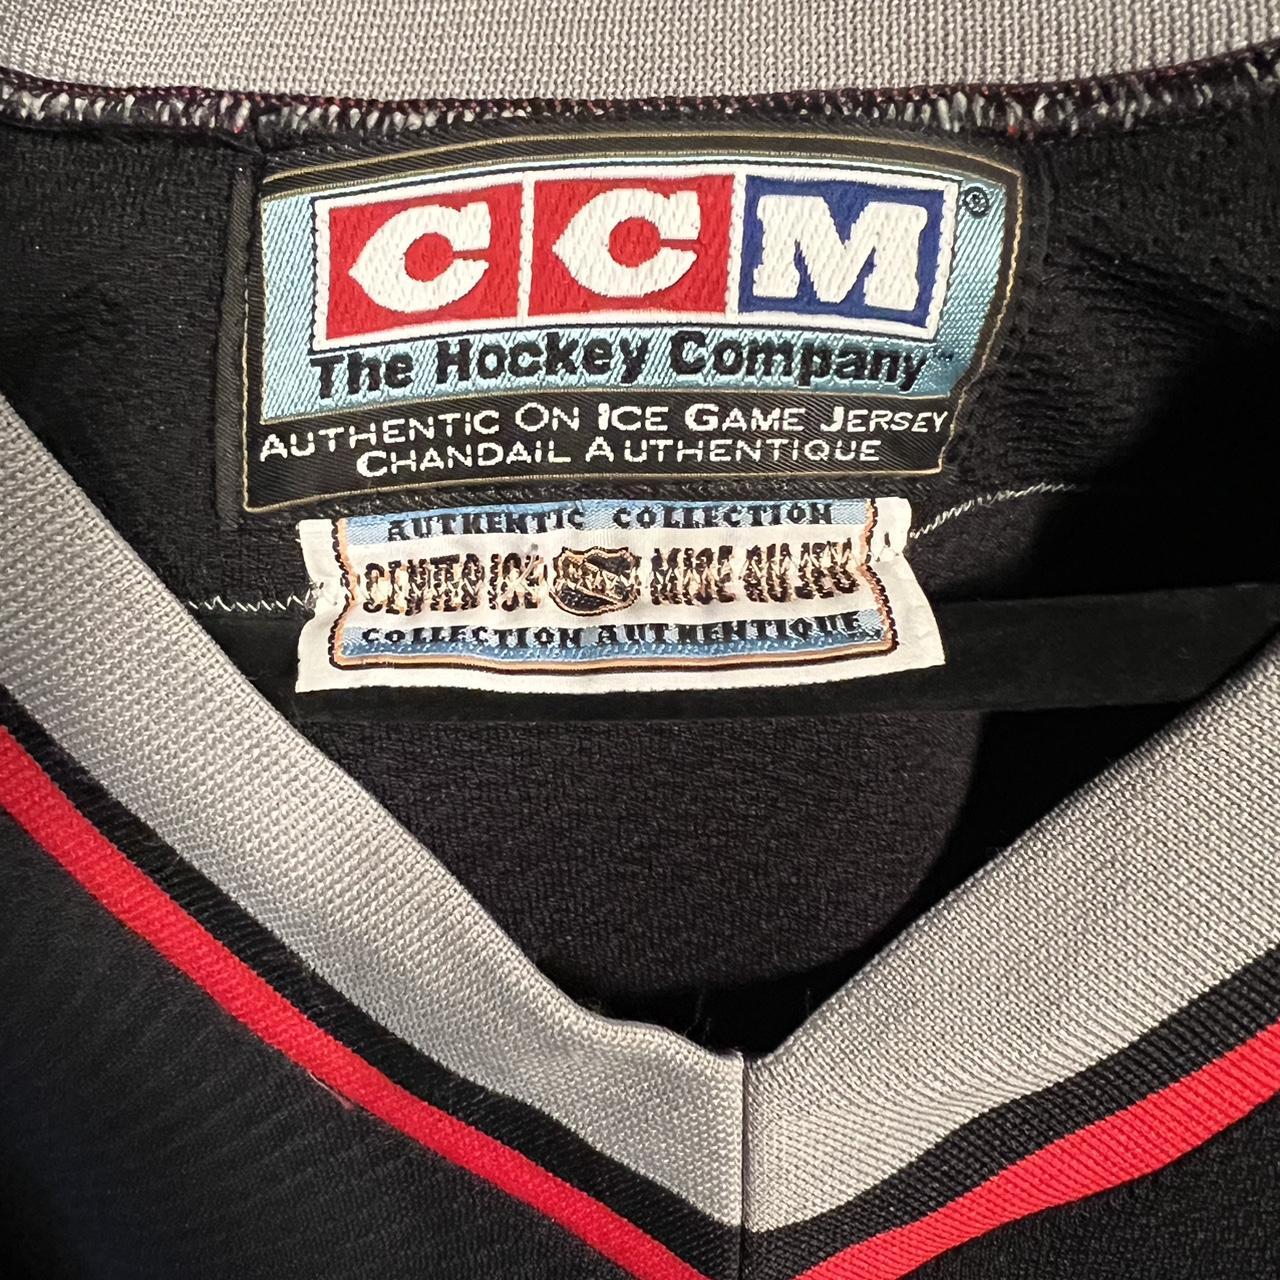 Vintage Nashville Predators CCM NHL Hockey Jersey - Depop